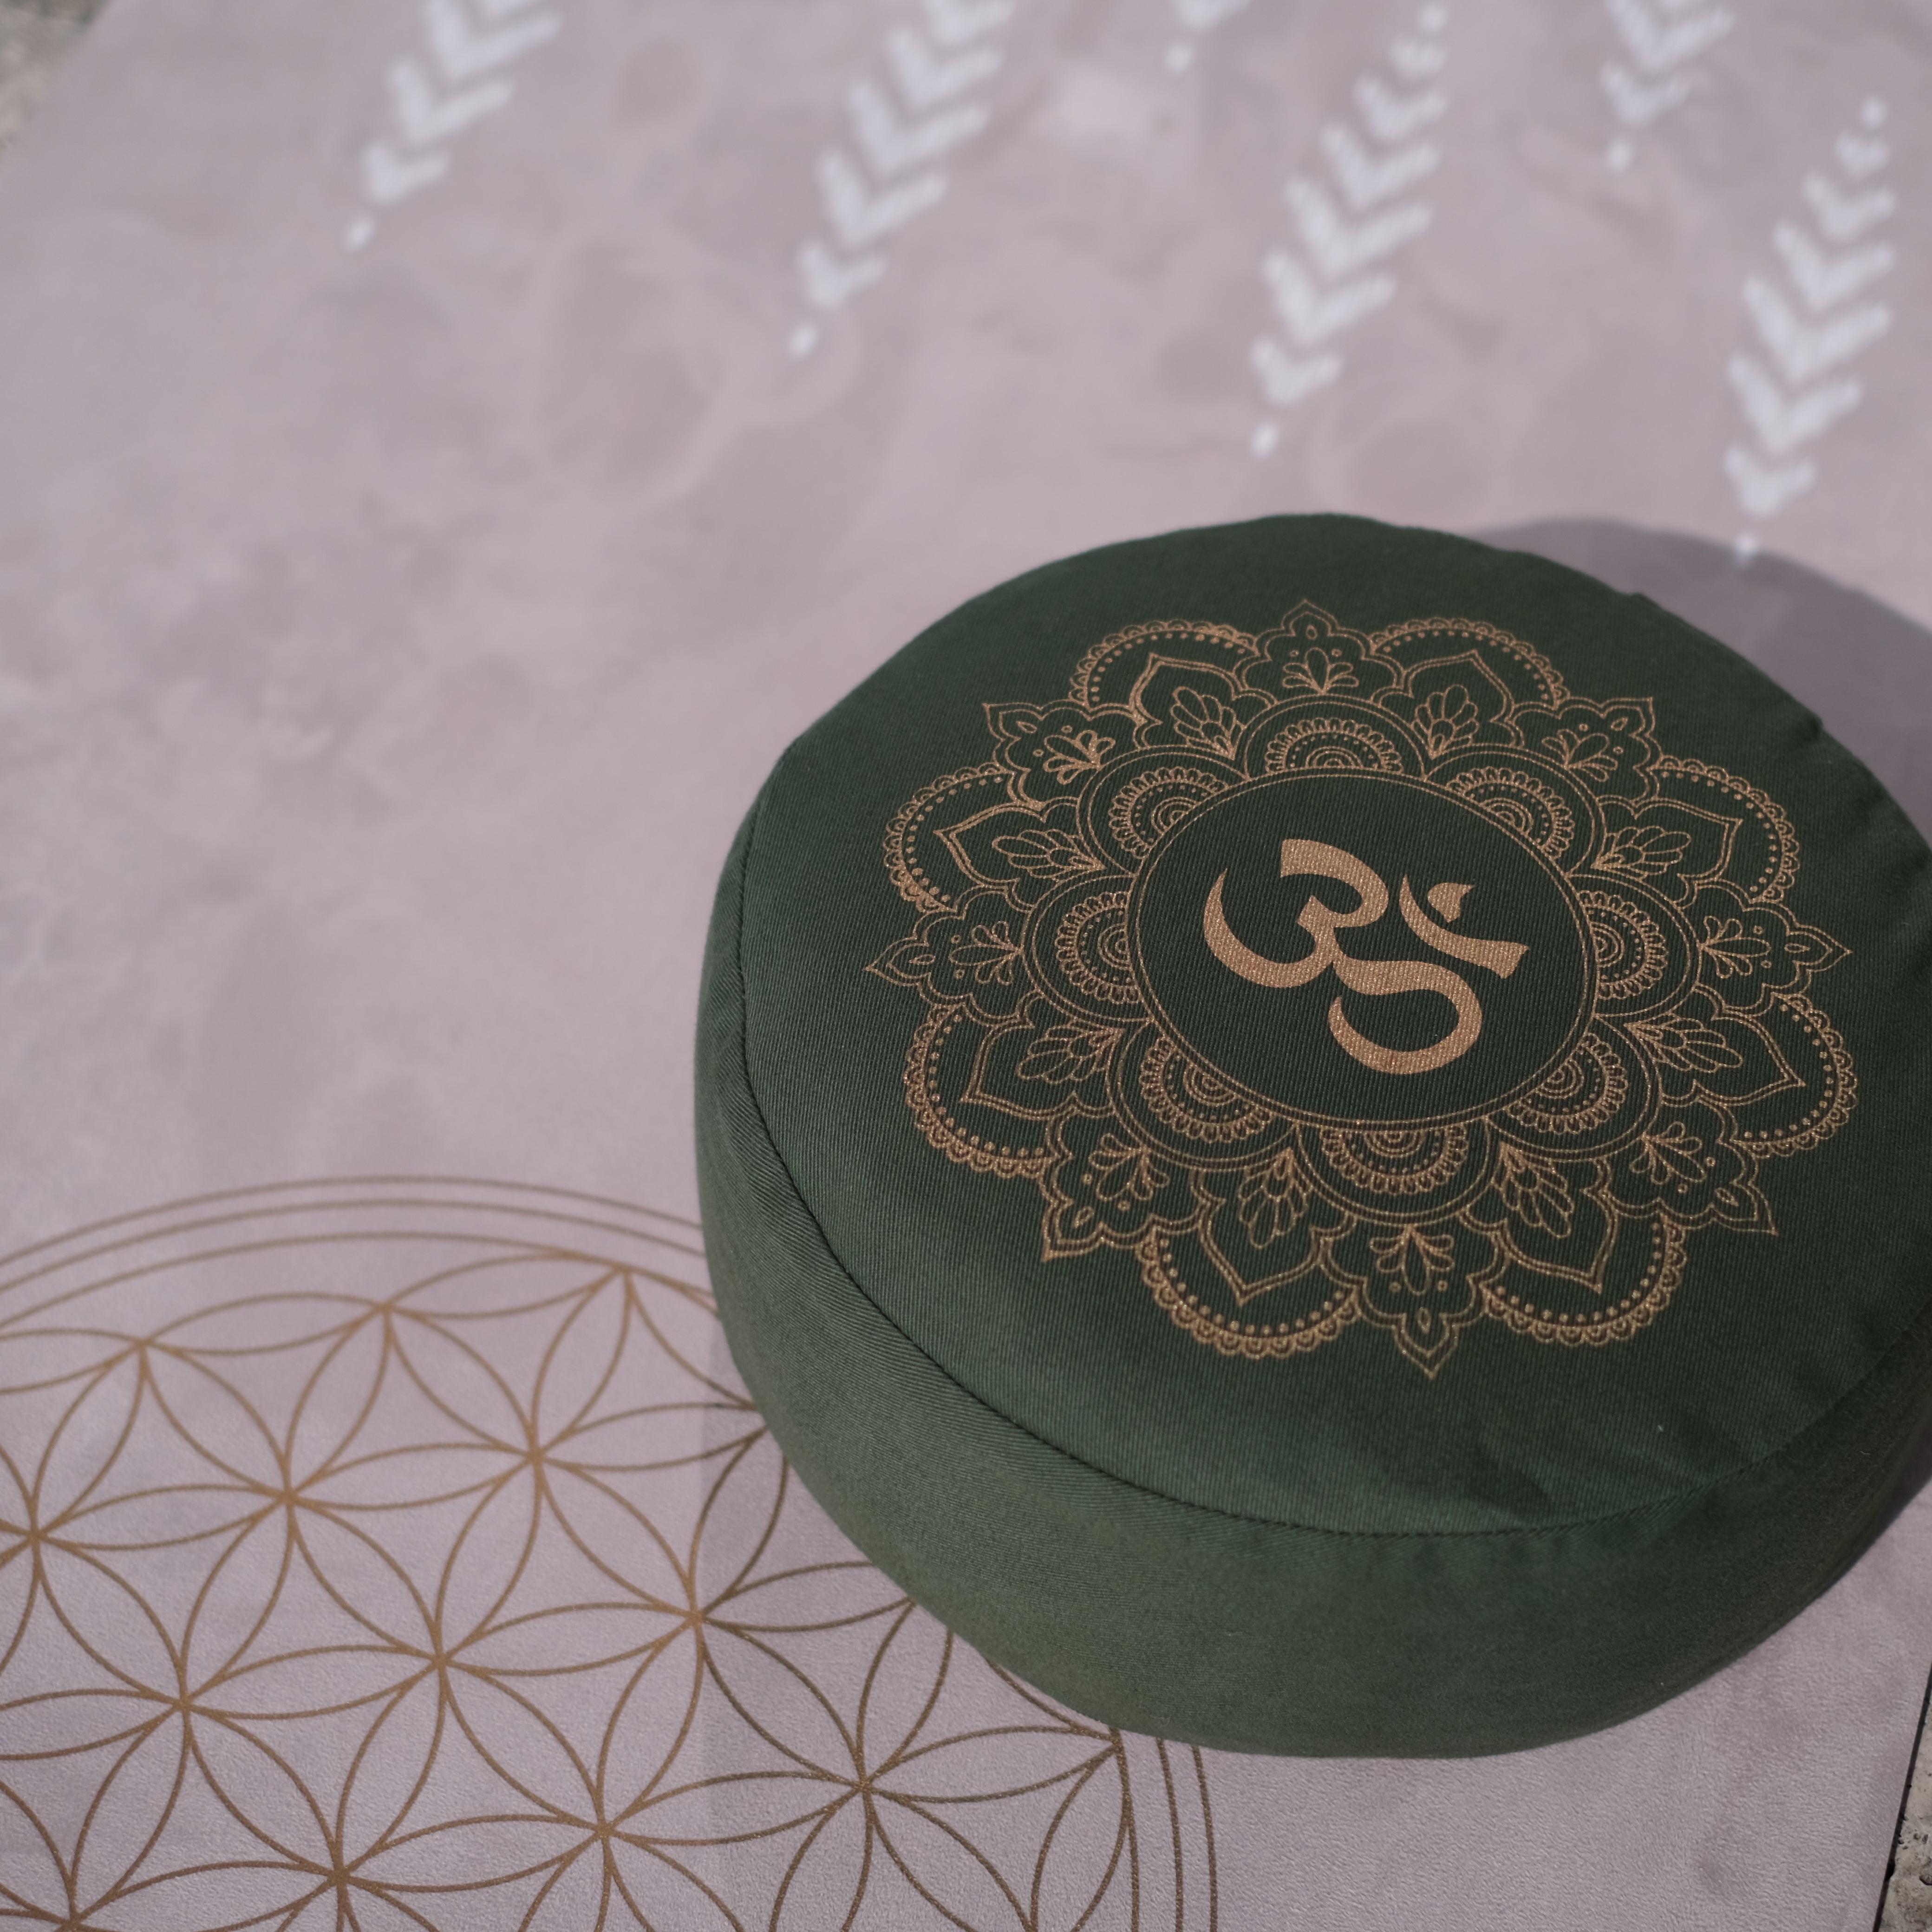 Cuscino da meditazione Mandala rotondo OM verde oliva